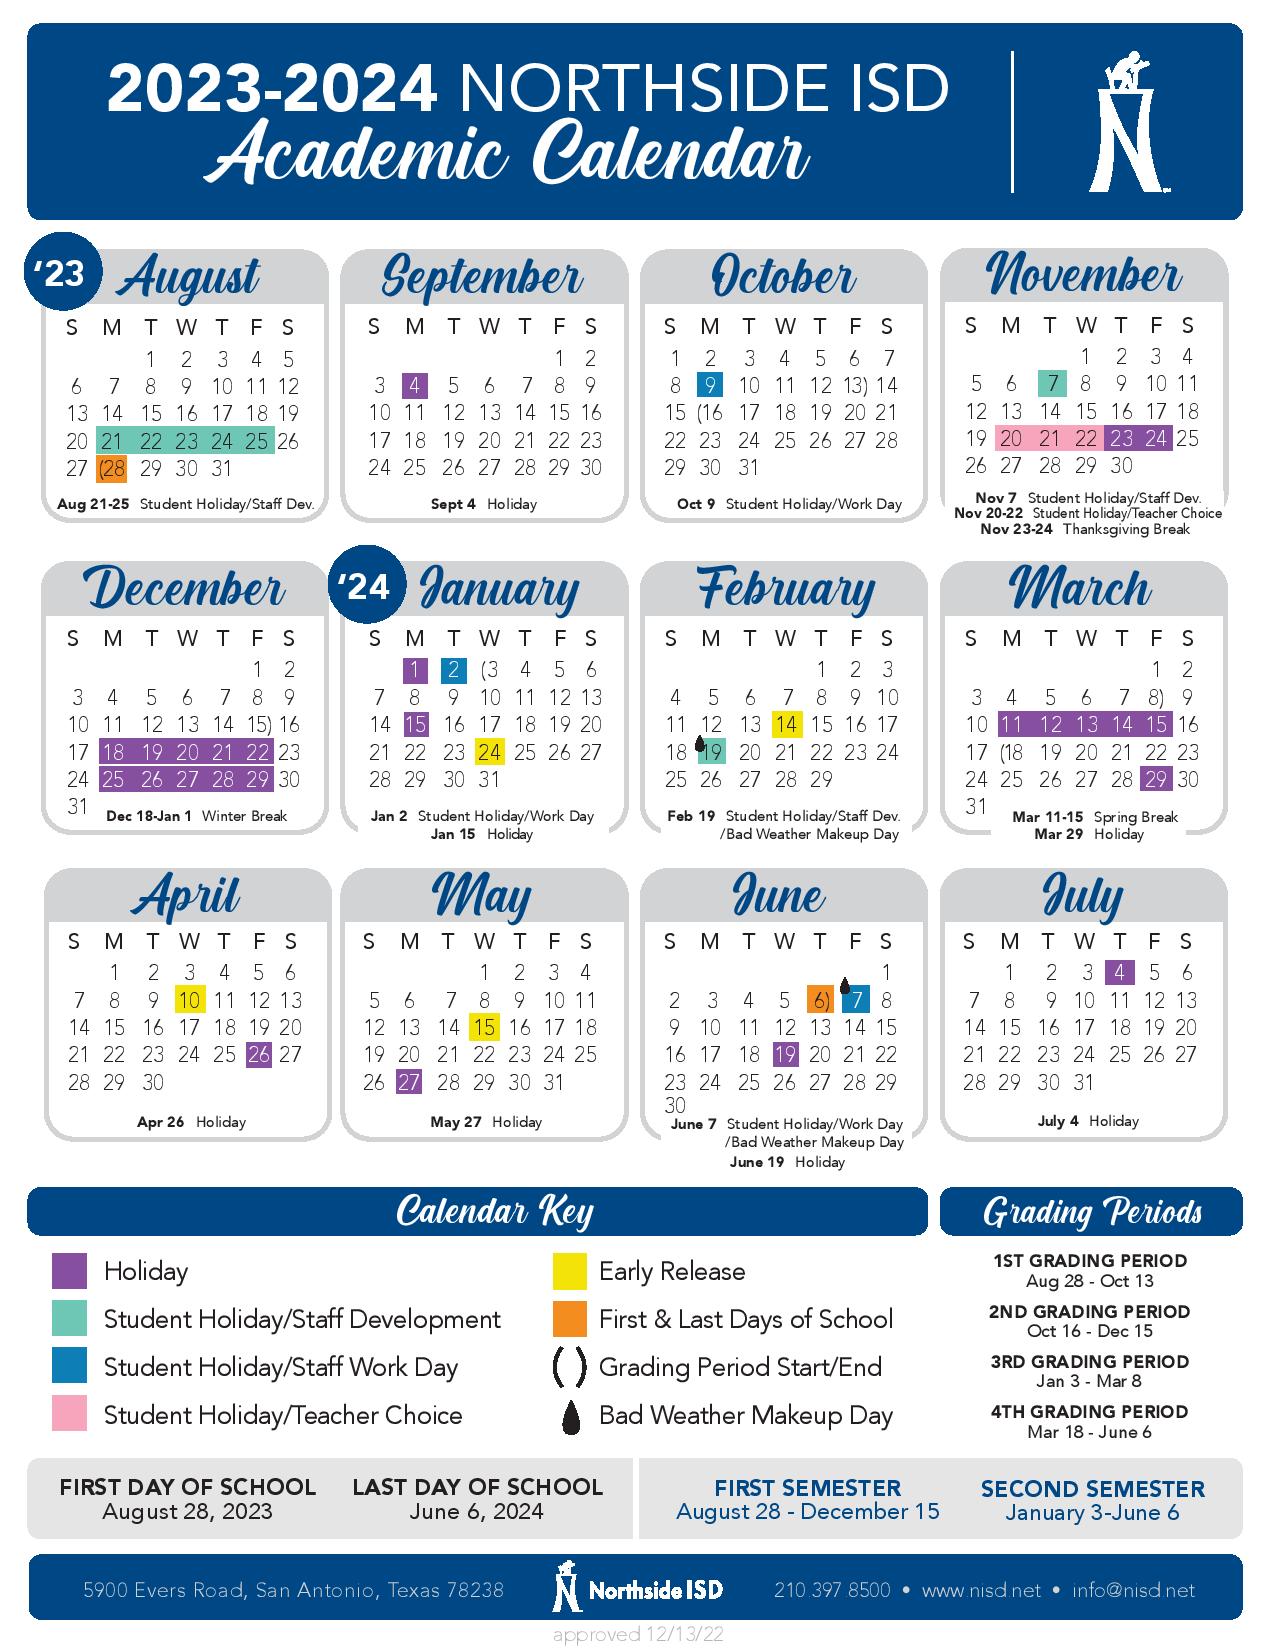 northside-independent-school-district-calendar-2023-2024-pdf-school-calendar-info